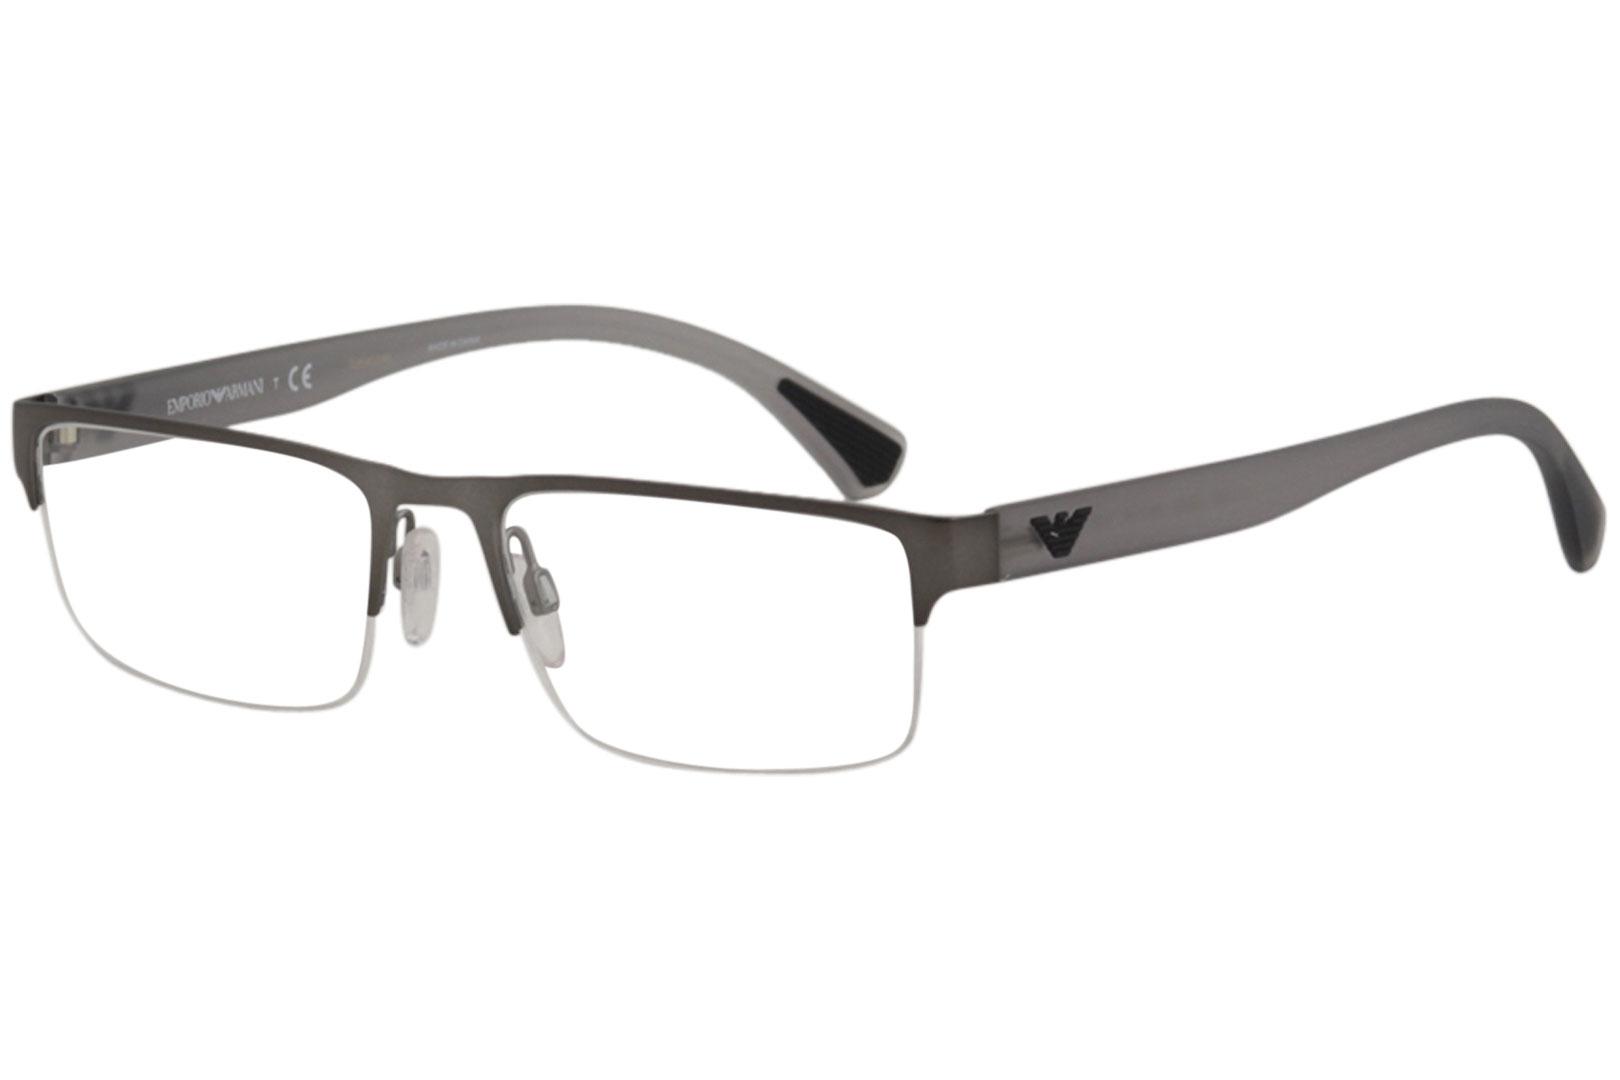 Giorgio Armani Mens Glasses Frames Clearance Deals, Save 48% 